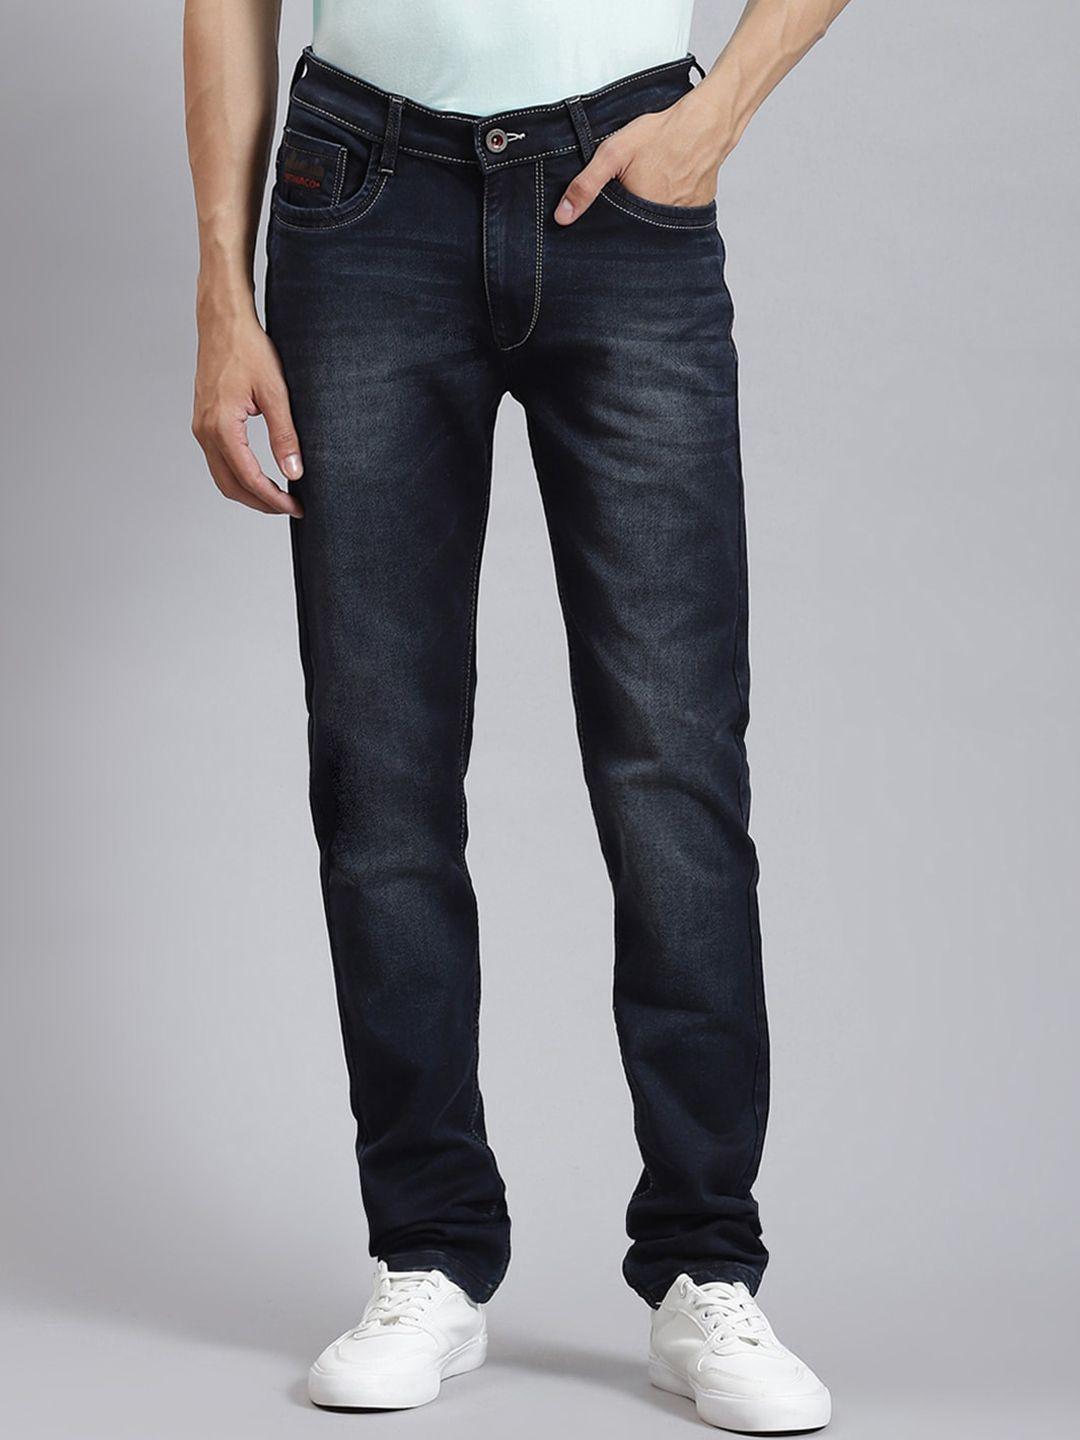 monte-carlo-men-light-fade-clean-look-jeans